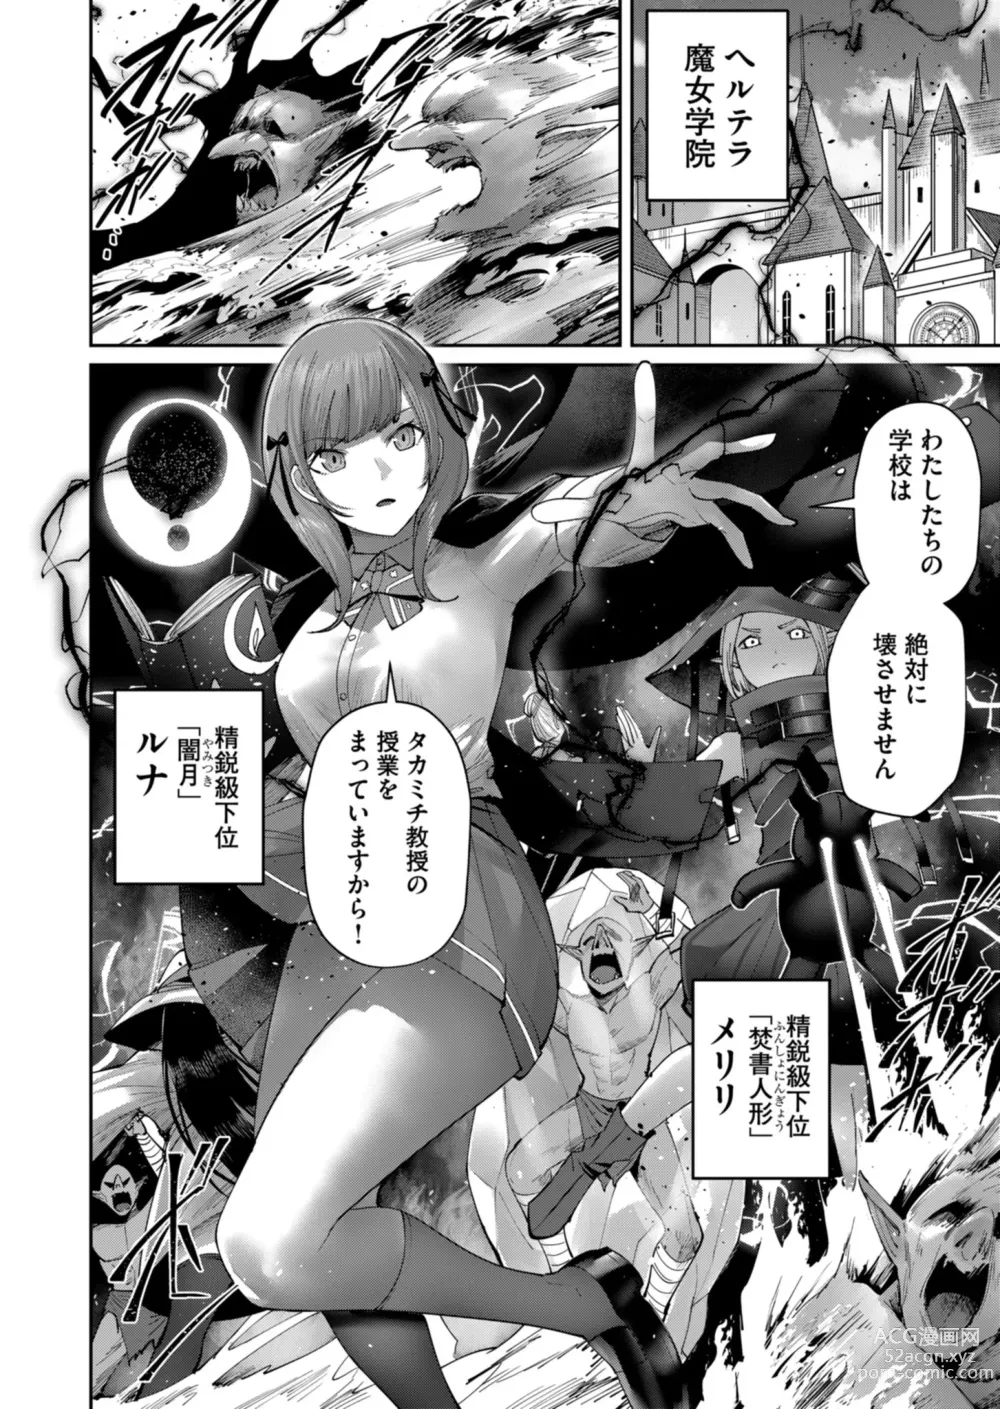 Page 162 of manga Kichiku Eiyuu Vol.06